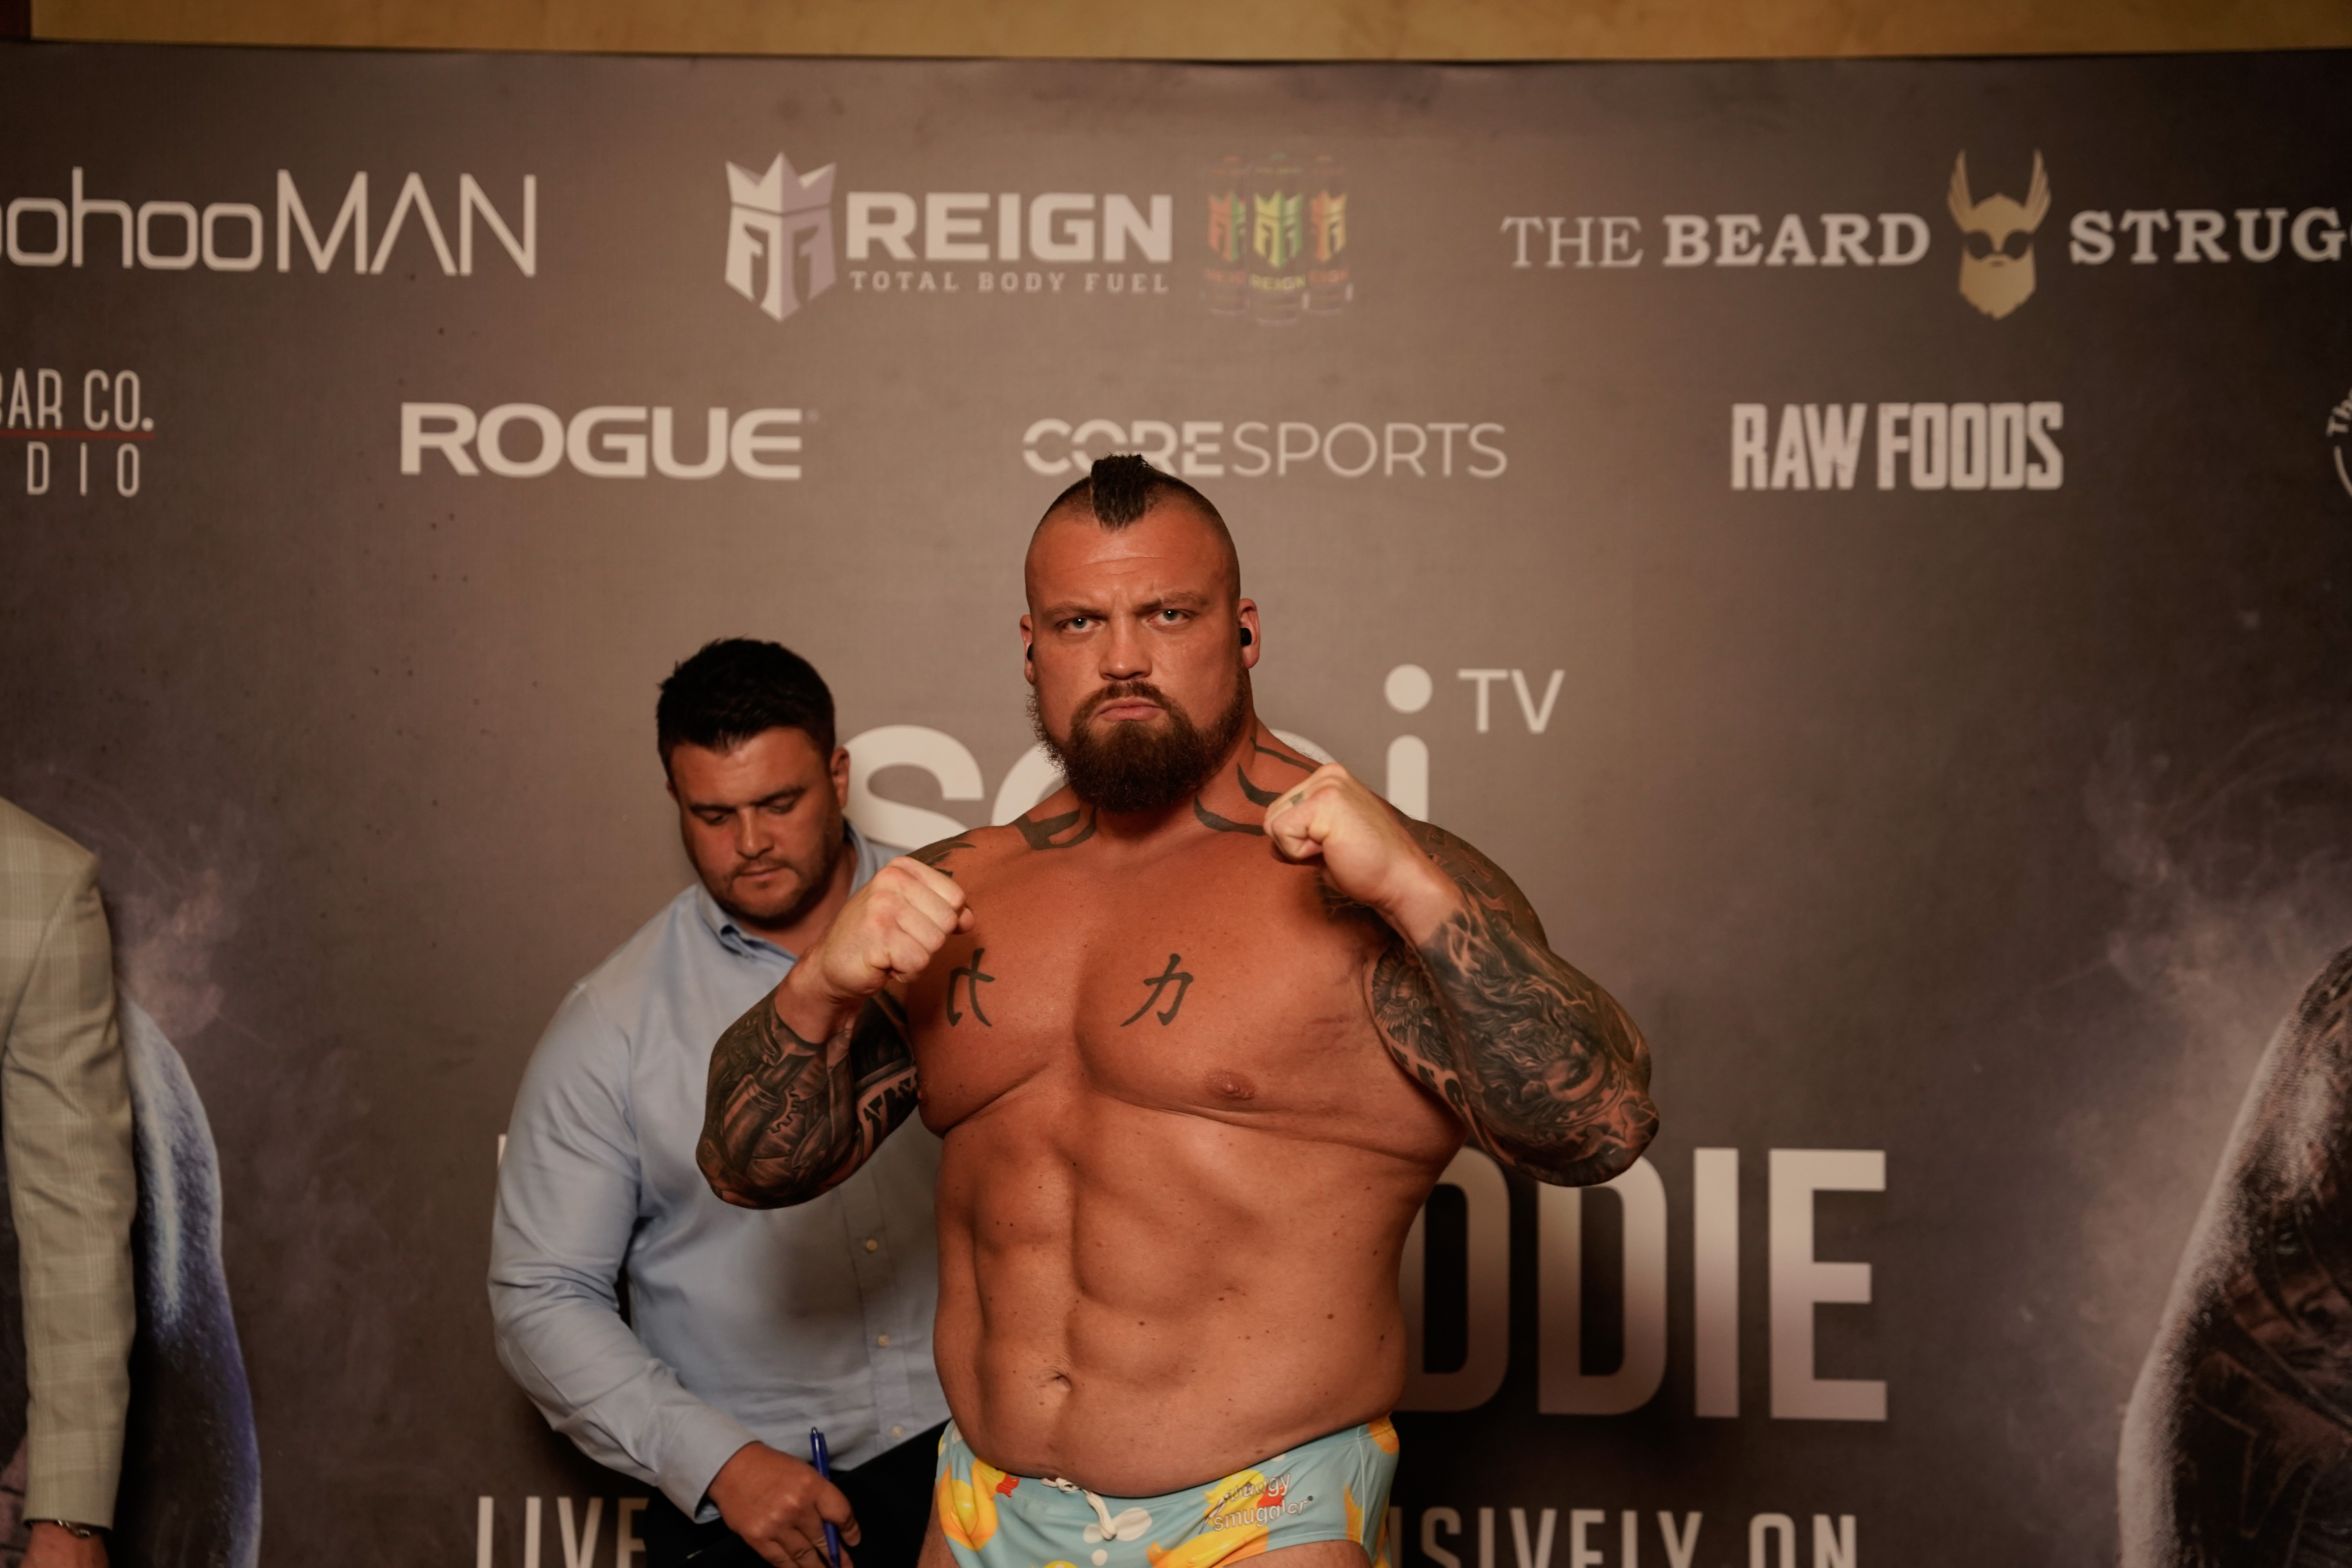 Eddie Hall vs Thor Bjornsson everything you need to know about heavyweight Dubai showdown